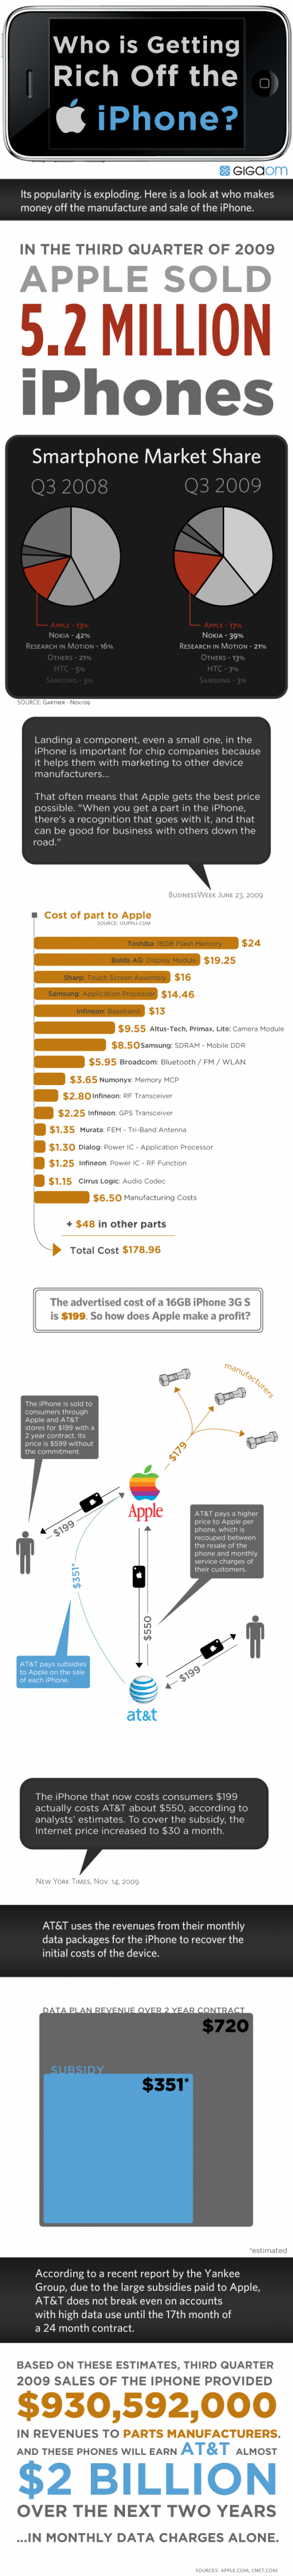 iPhone-Profits-Statistics-wcie_chiffres_du_web_mobile_iPhone525x4615